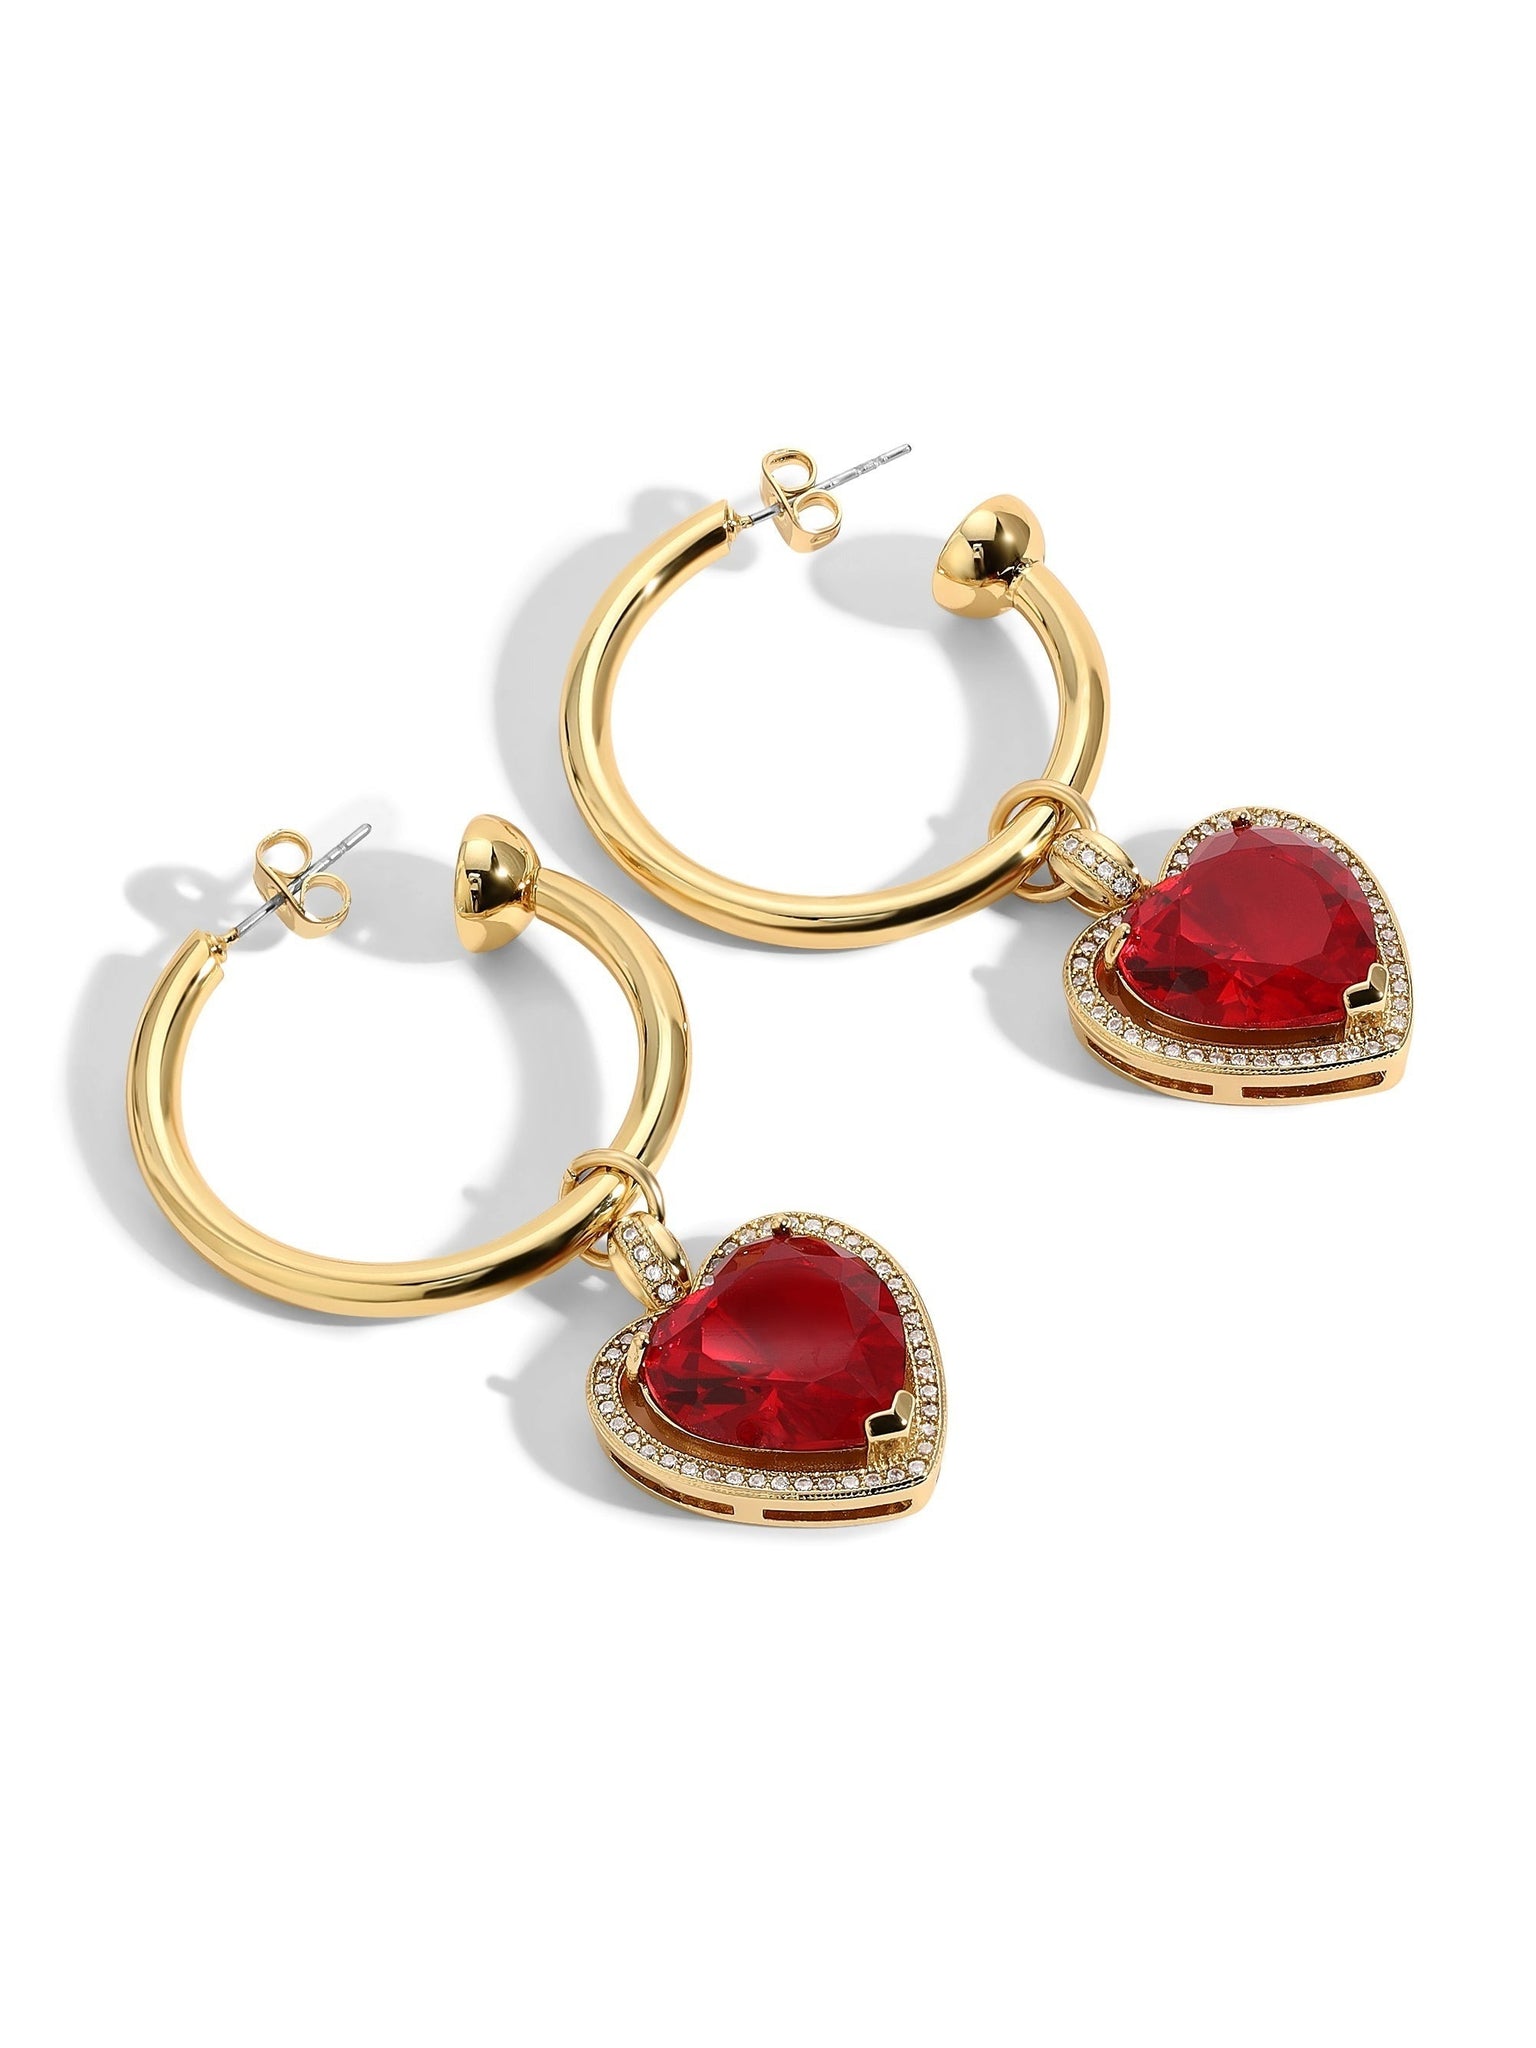 The Ruby Heart Hoop Earrings